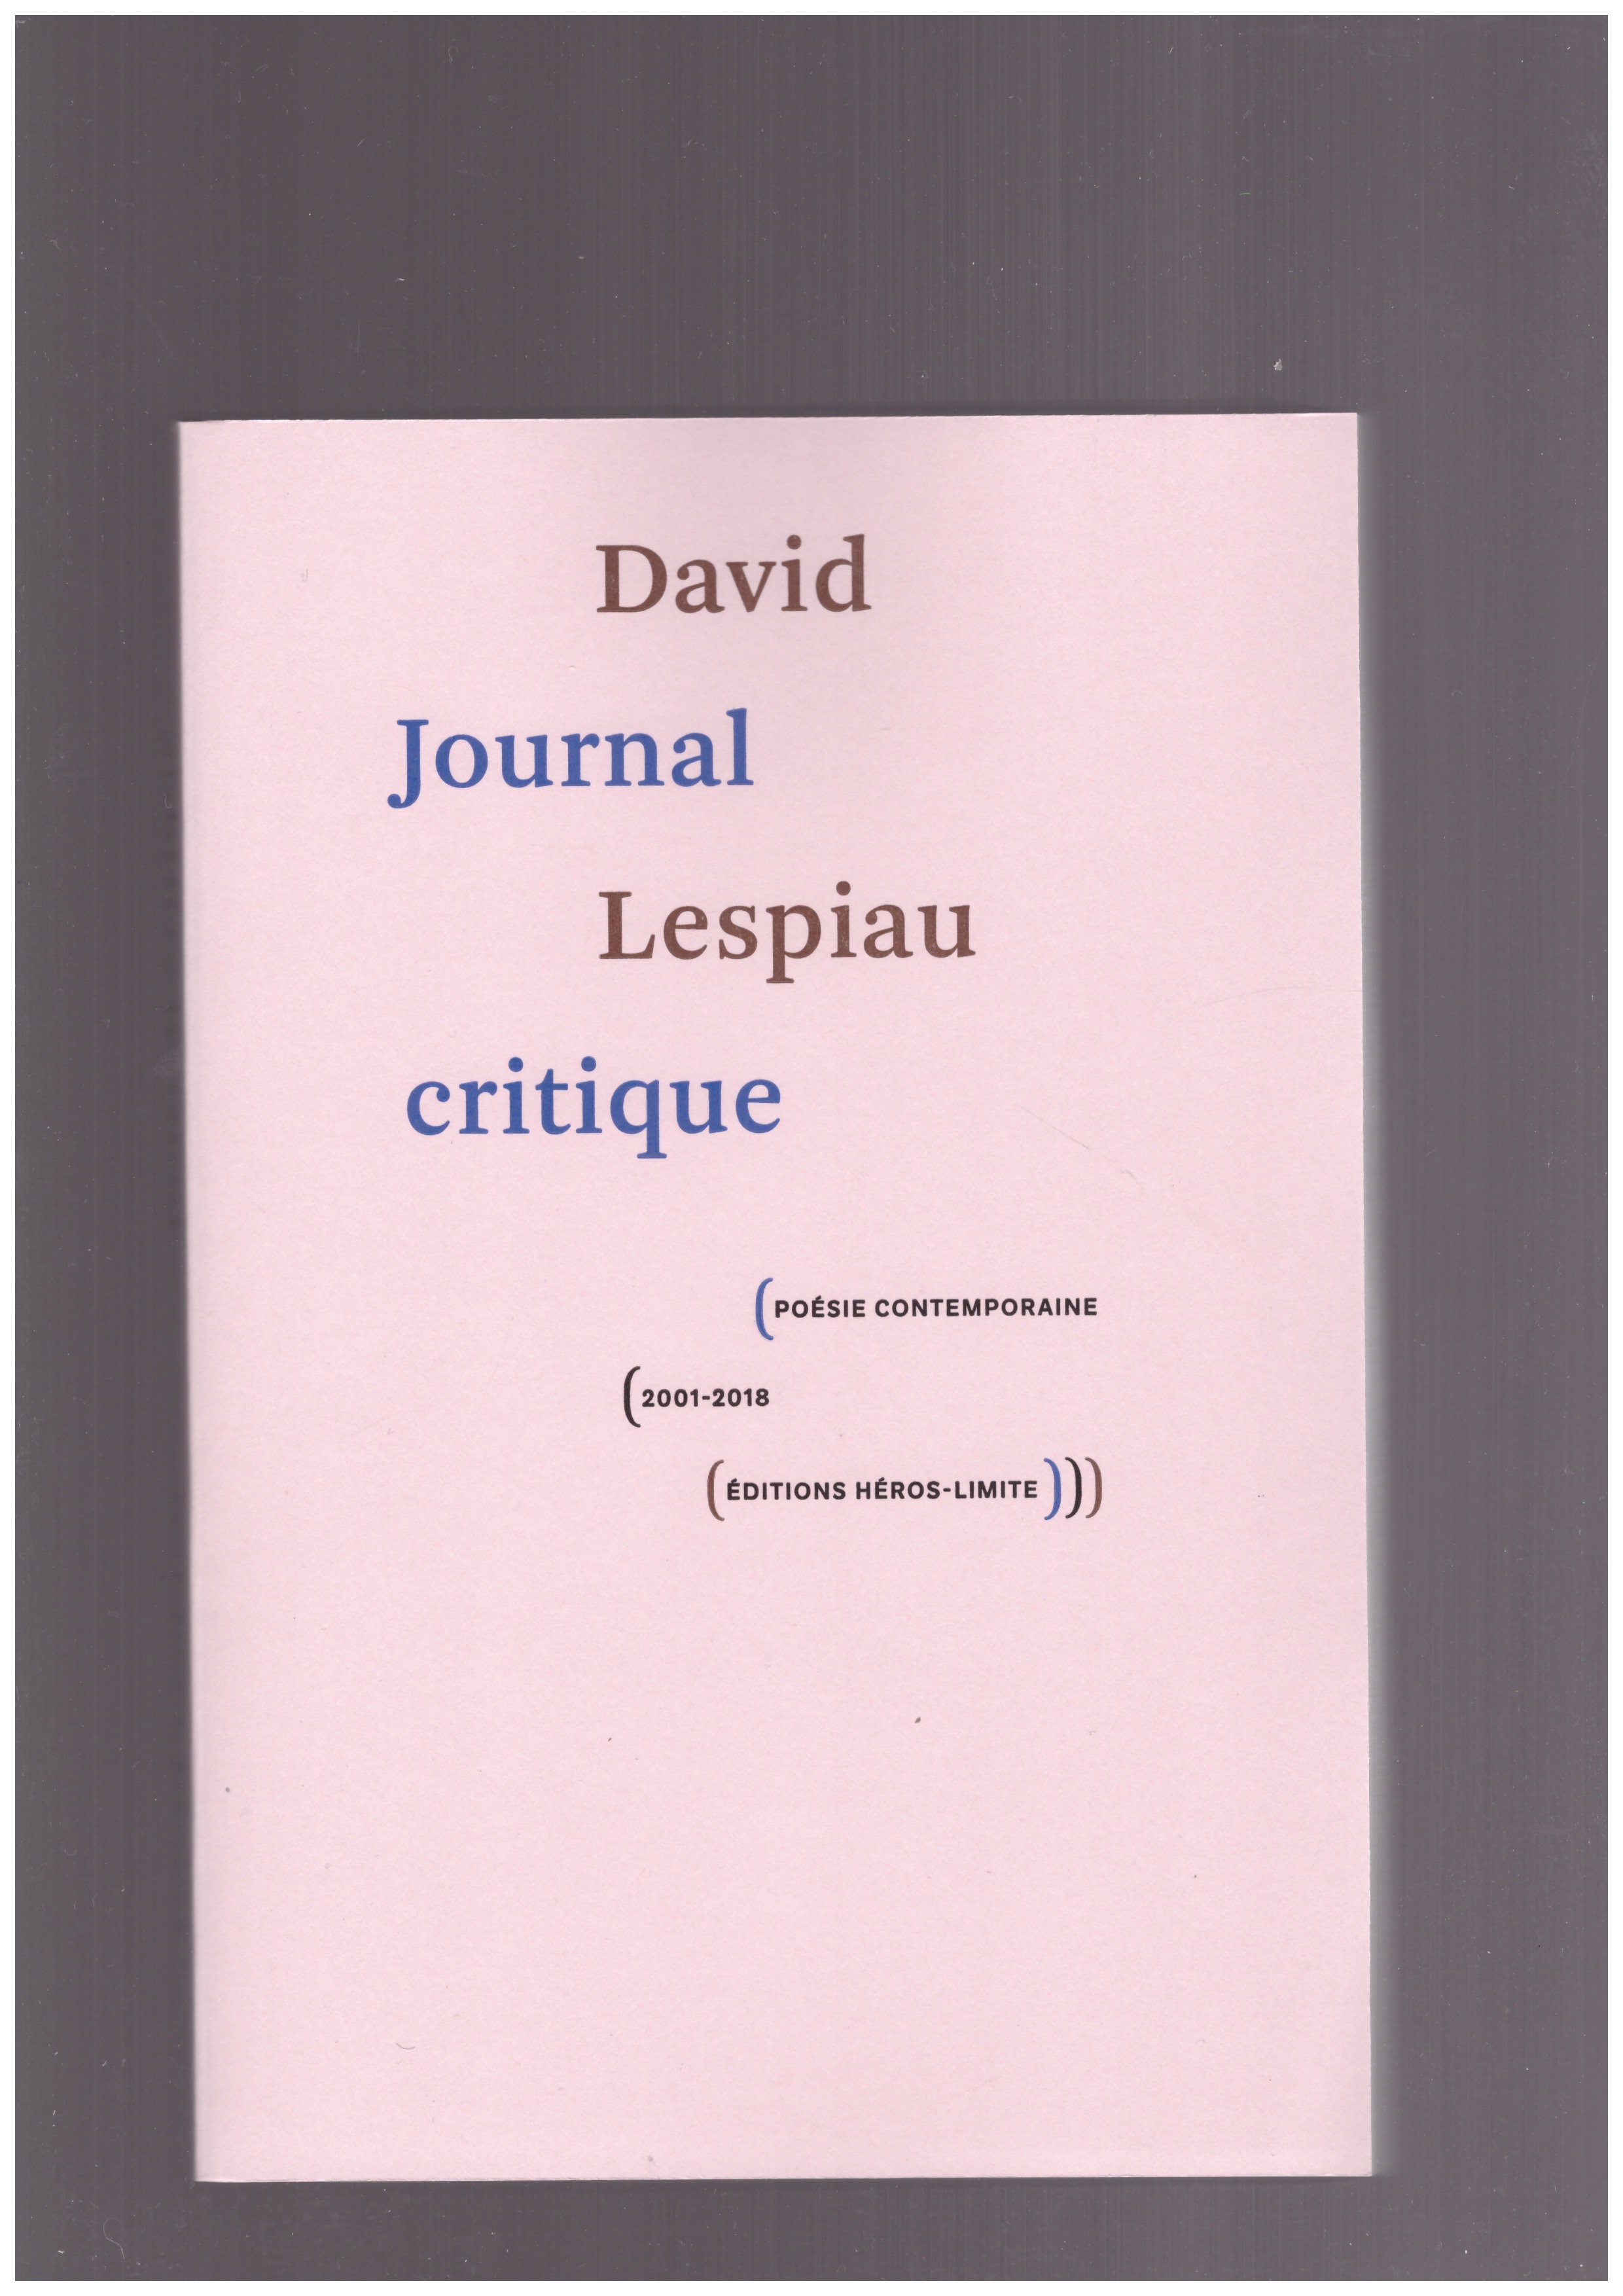 LESPIAU, David - Journal critique